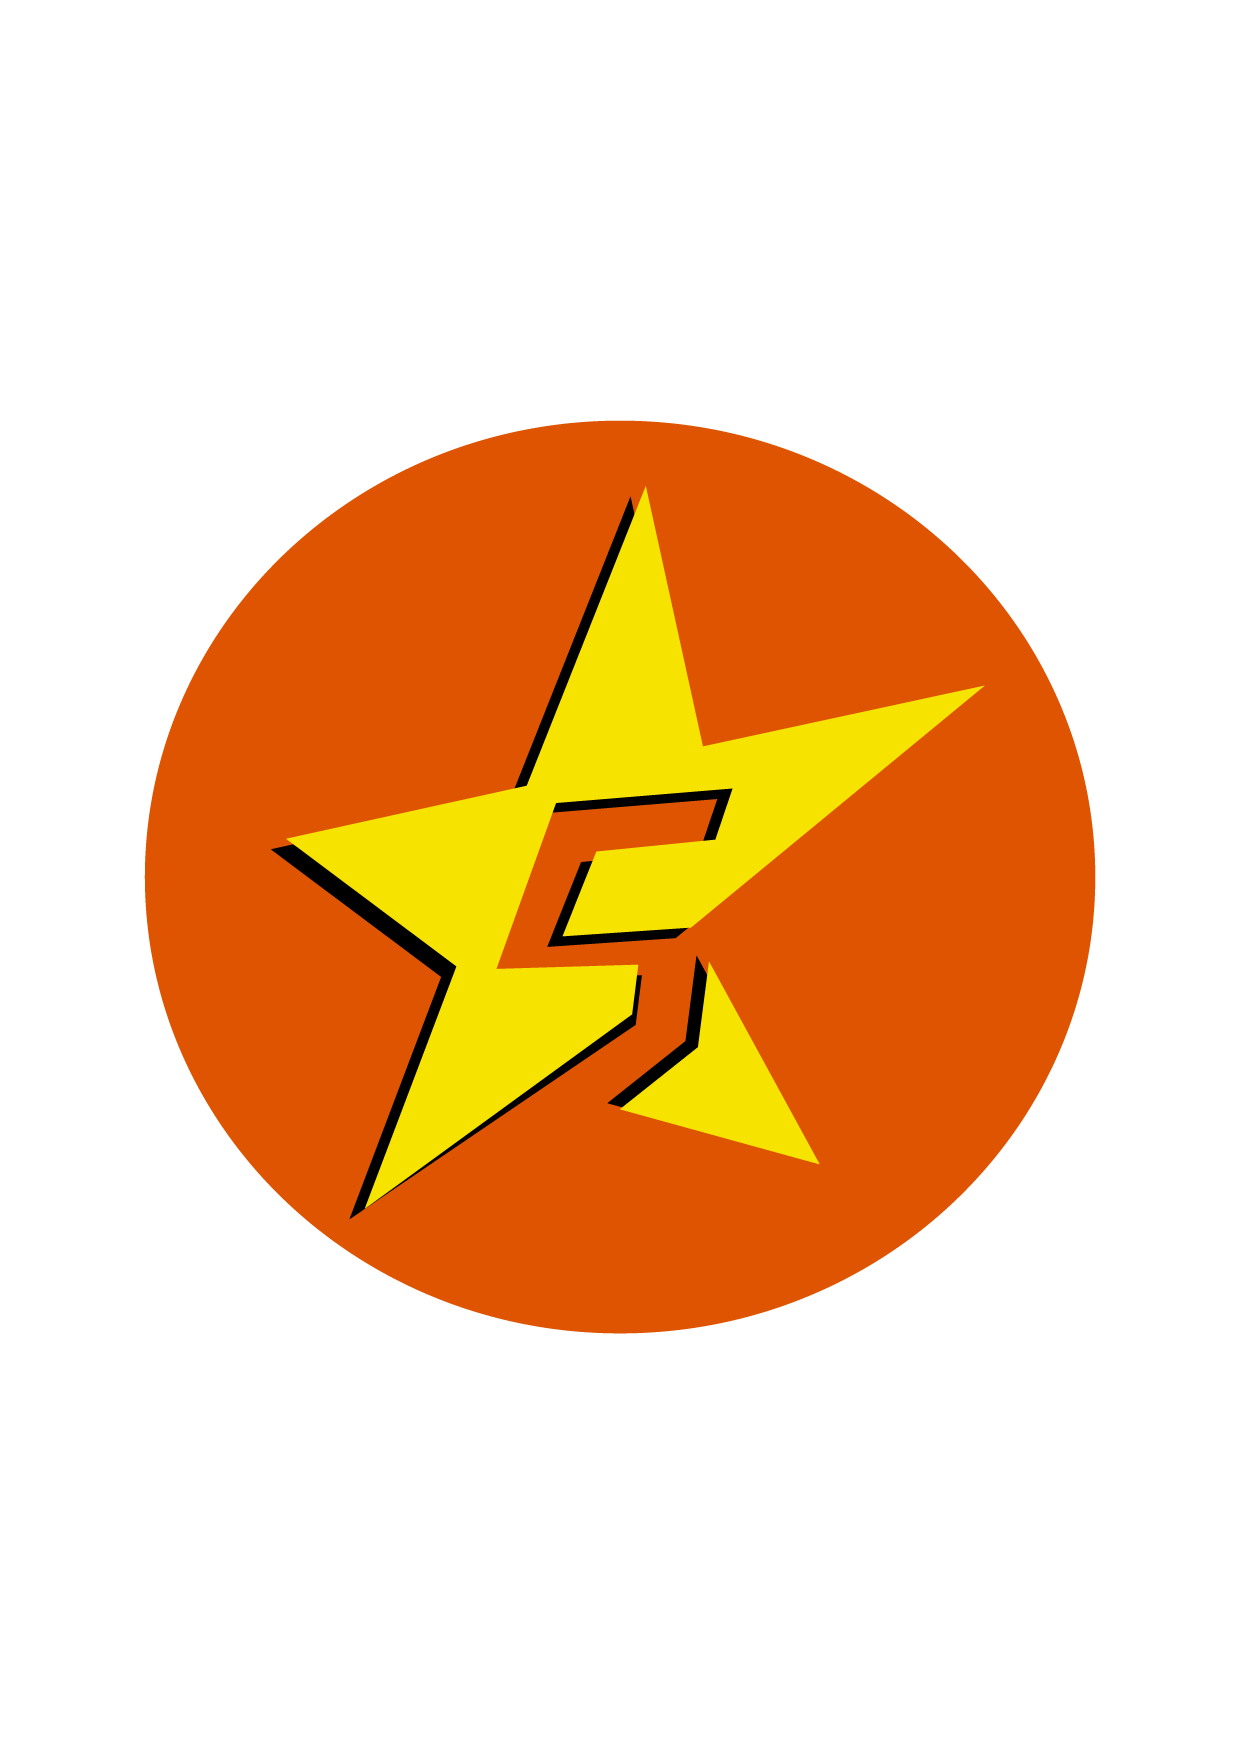 All Stars logo